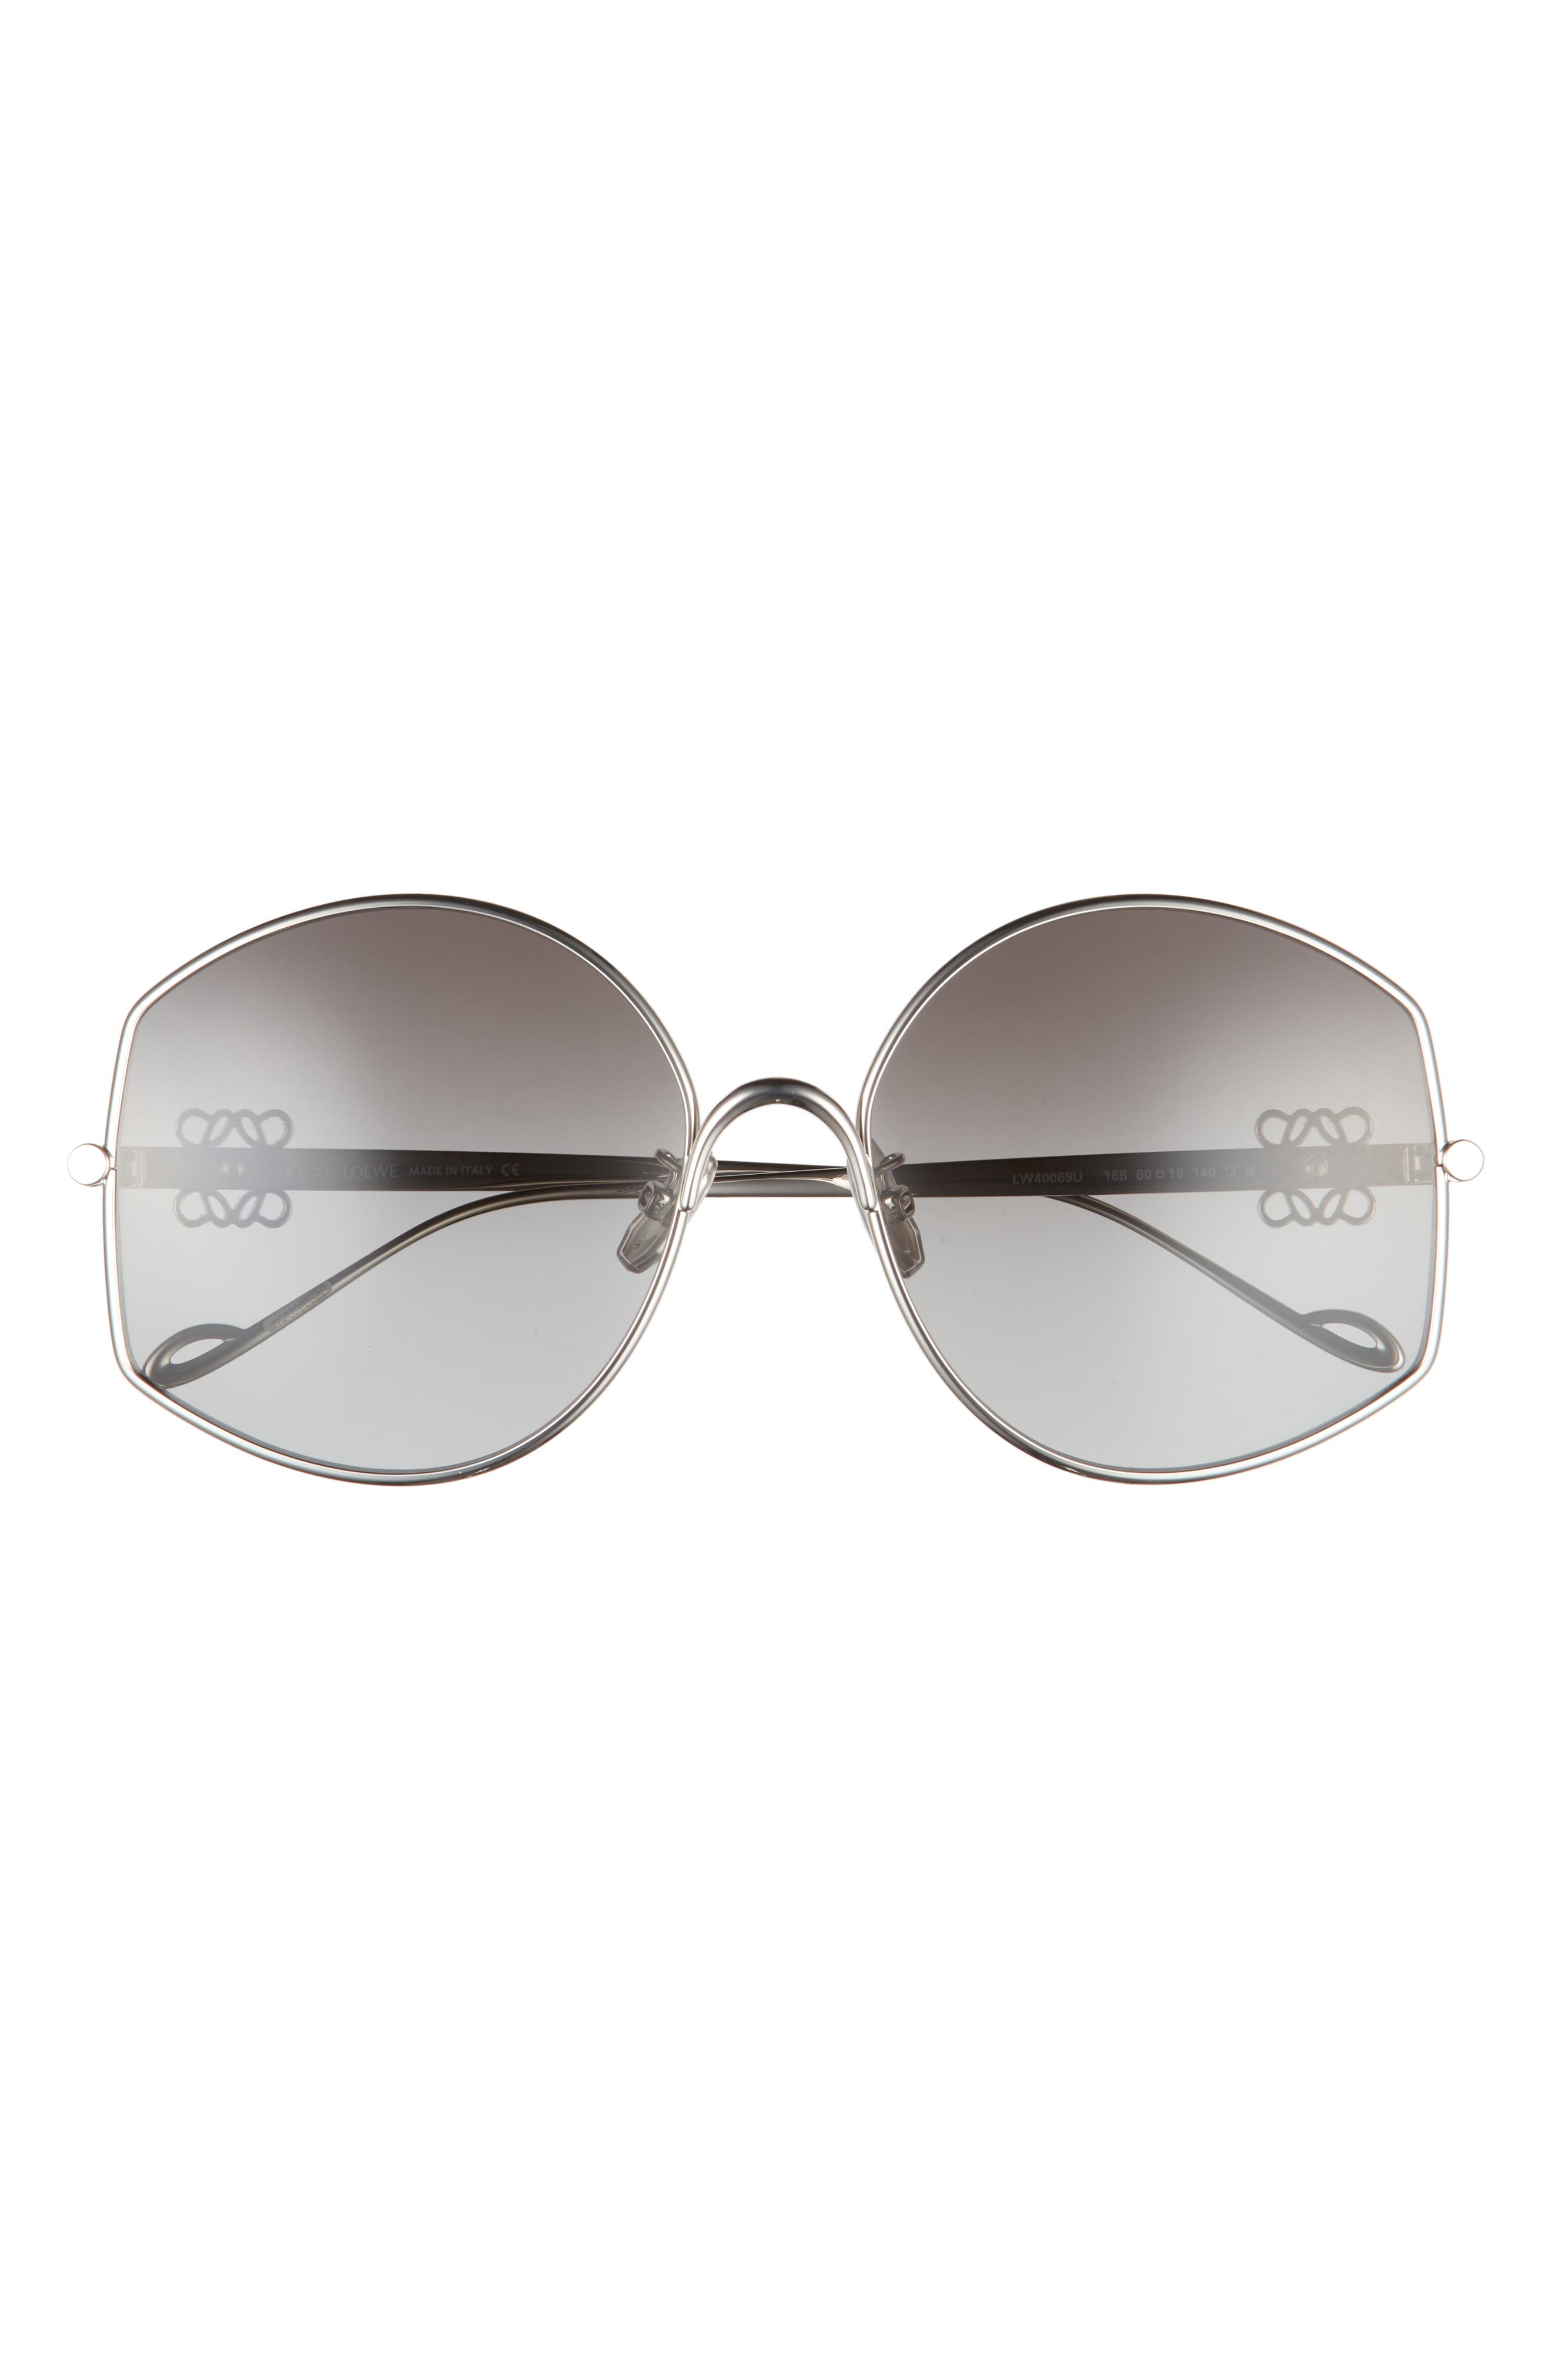 Loewe 60mm Round Sunglasses in Shiny Palladium /Gradient at Nordstrom